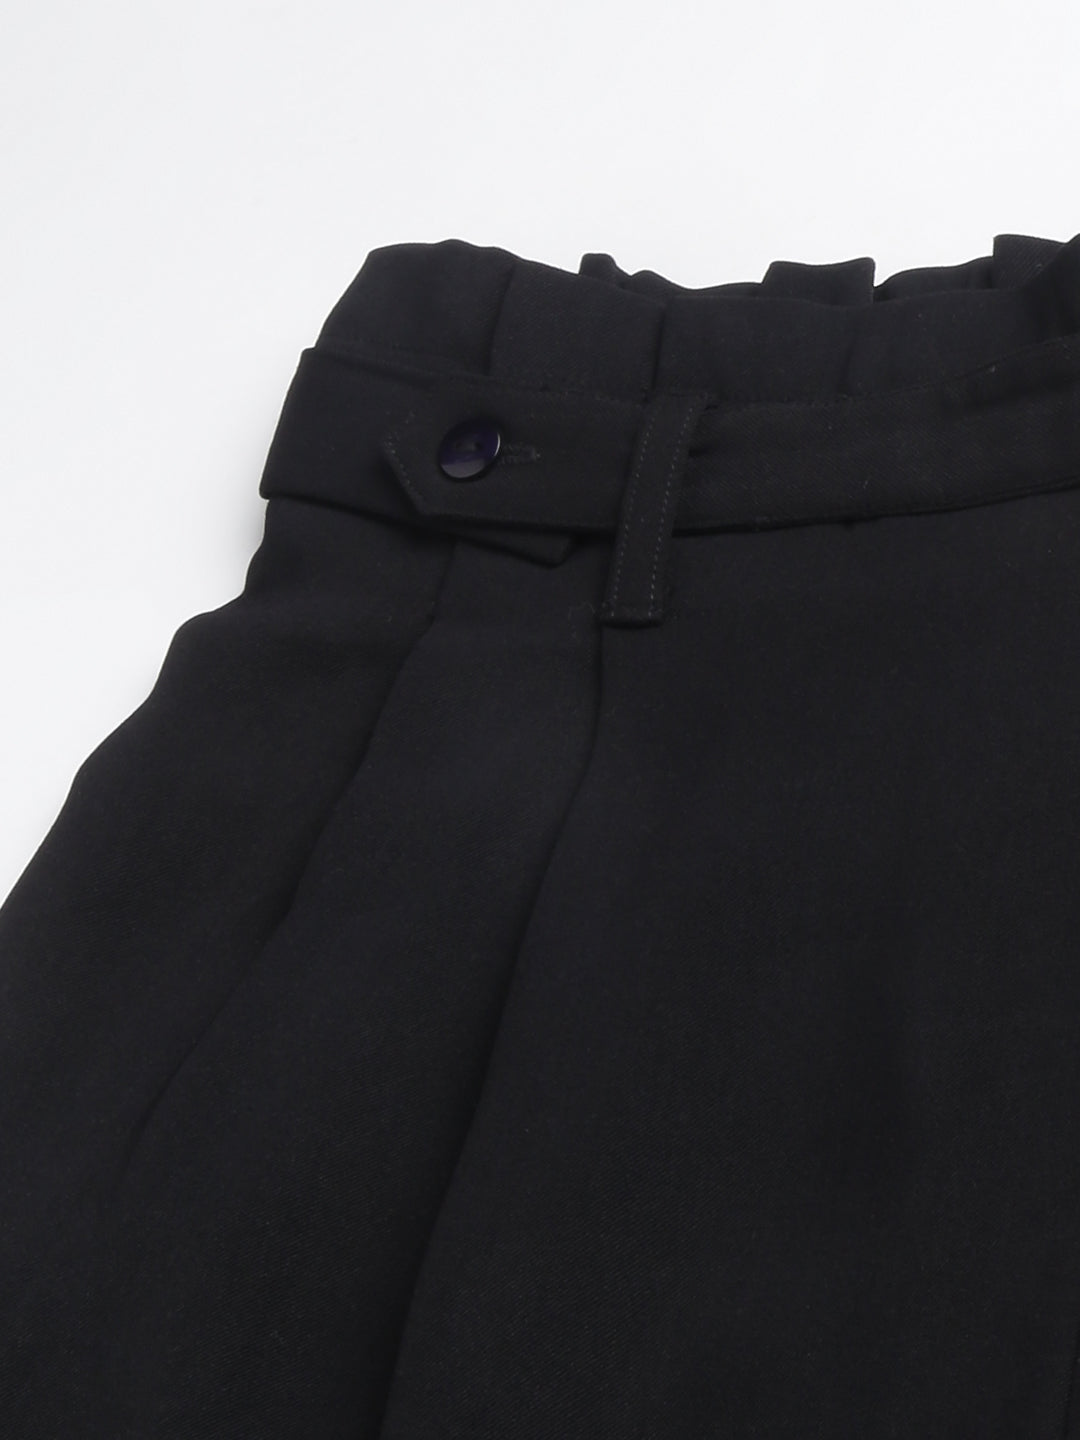 Women Casual Wide Leg Trousers PU Faux Leather Ankle Pants Elastic Waist  Black | eBay